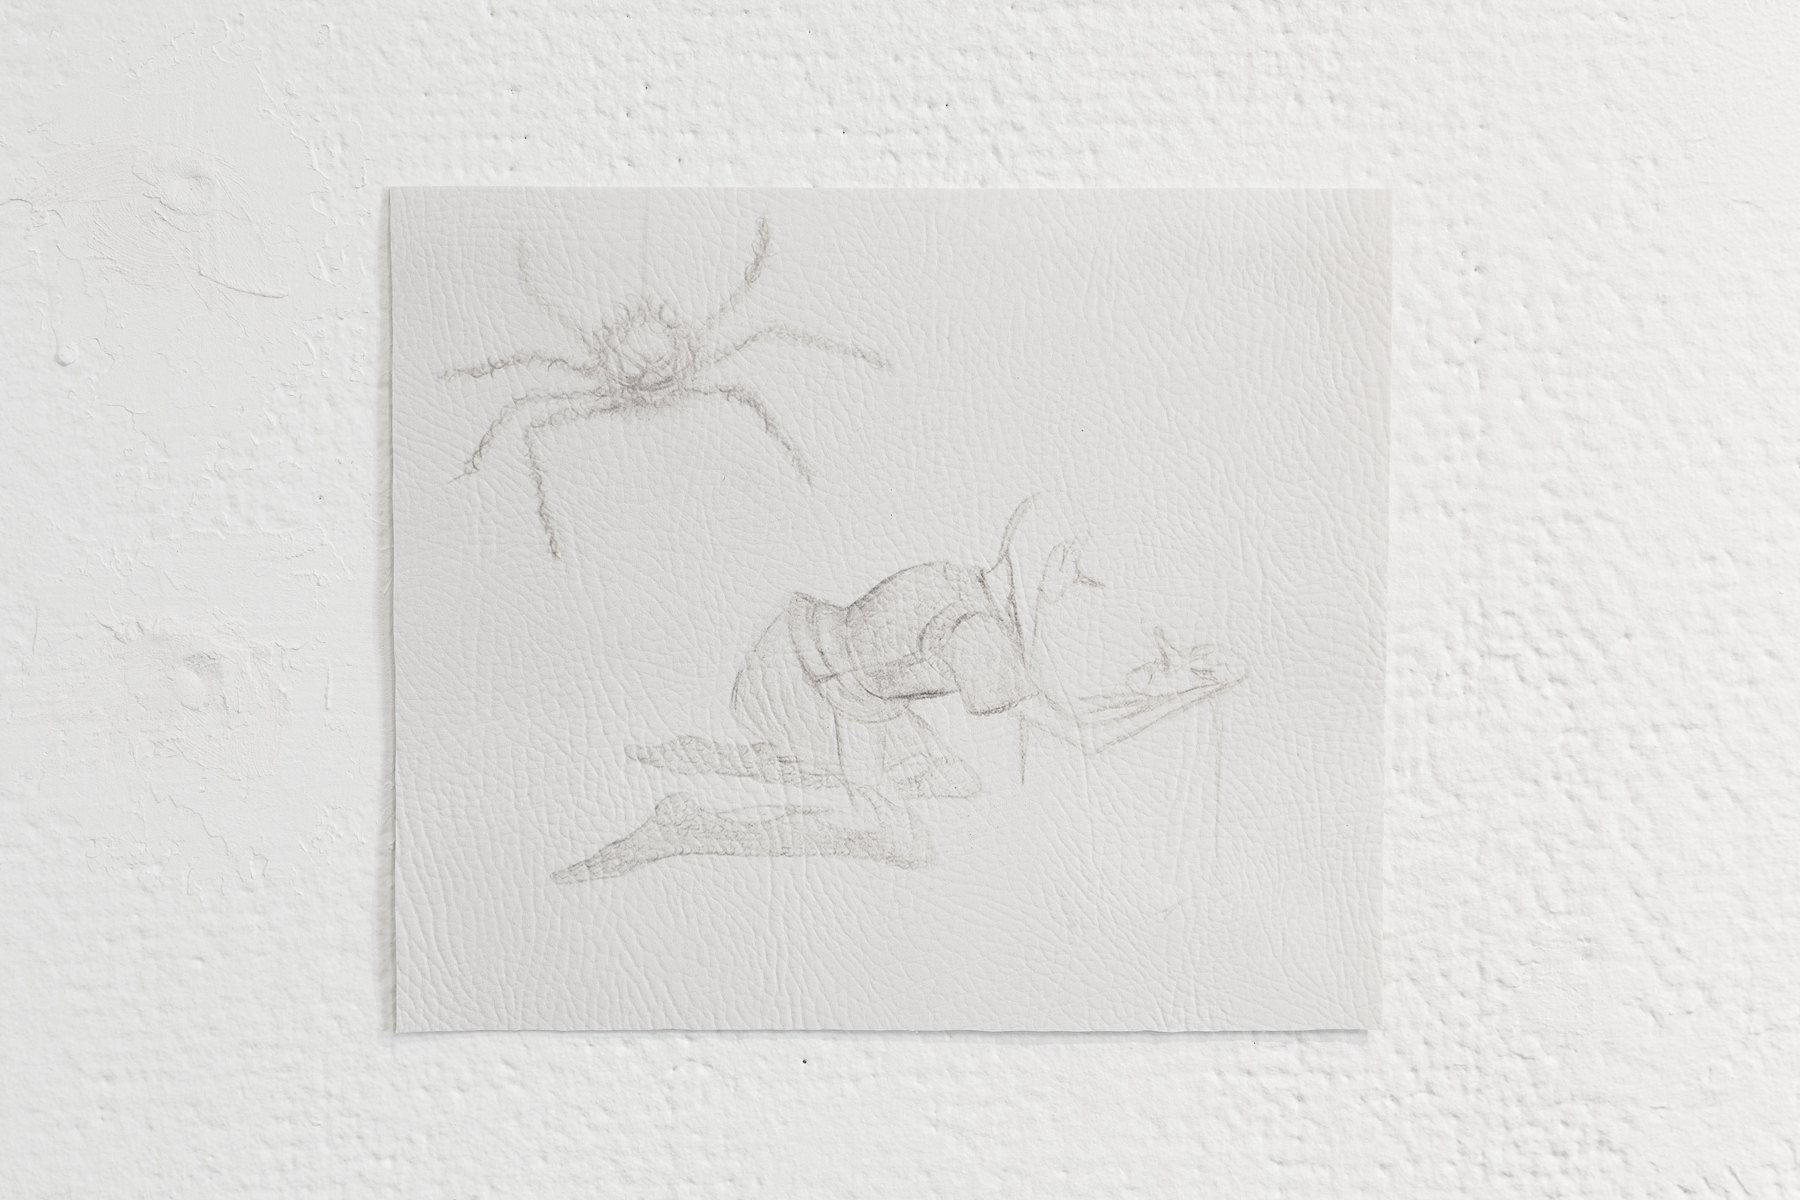 Johanna Härkönen, Spider Paws, 2021, Vegan leather print